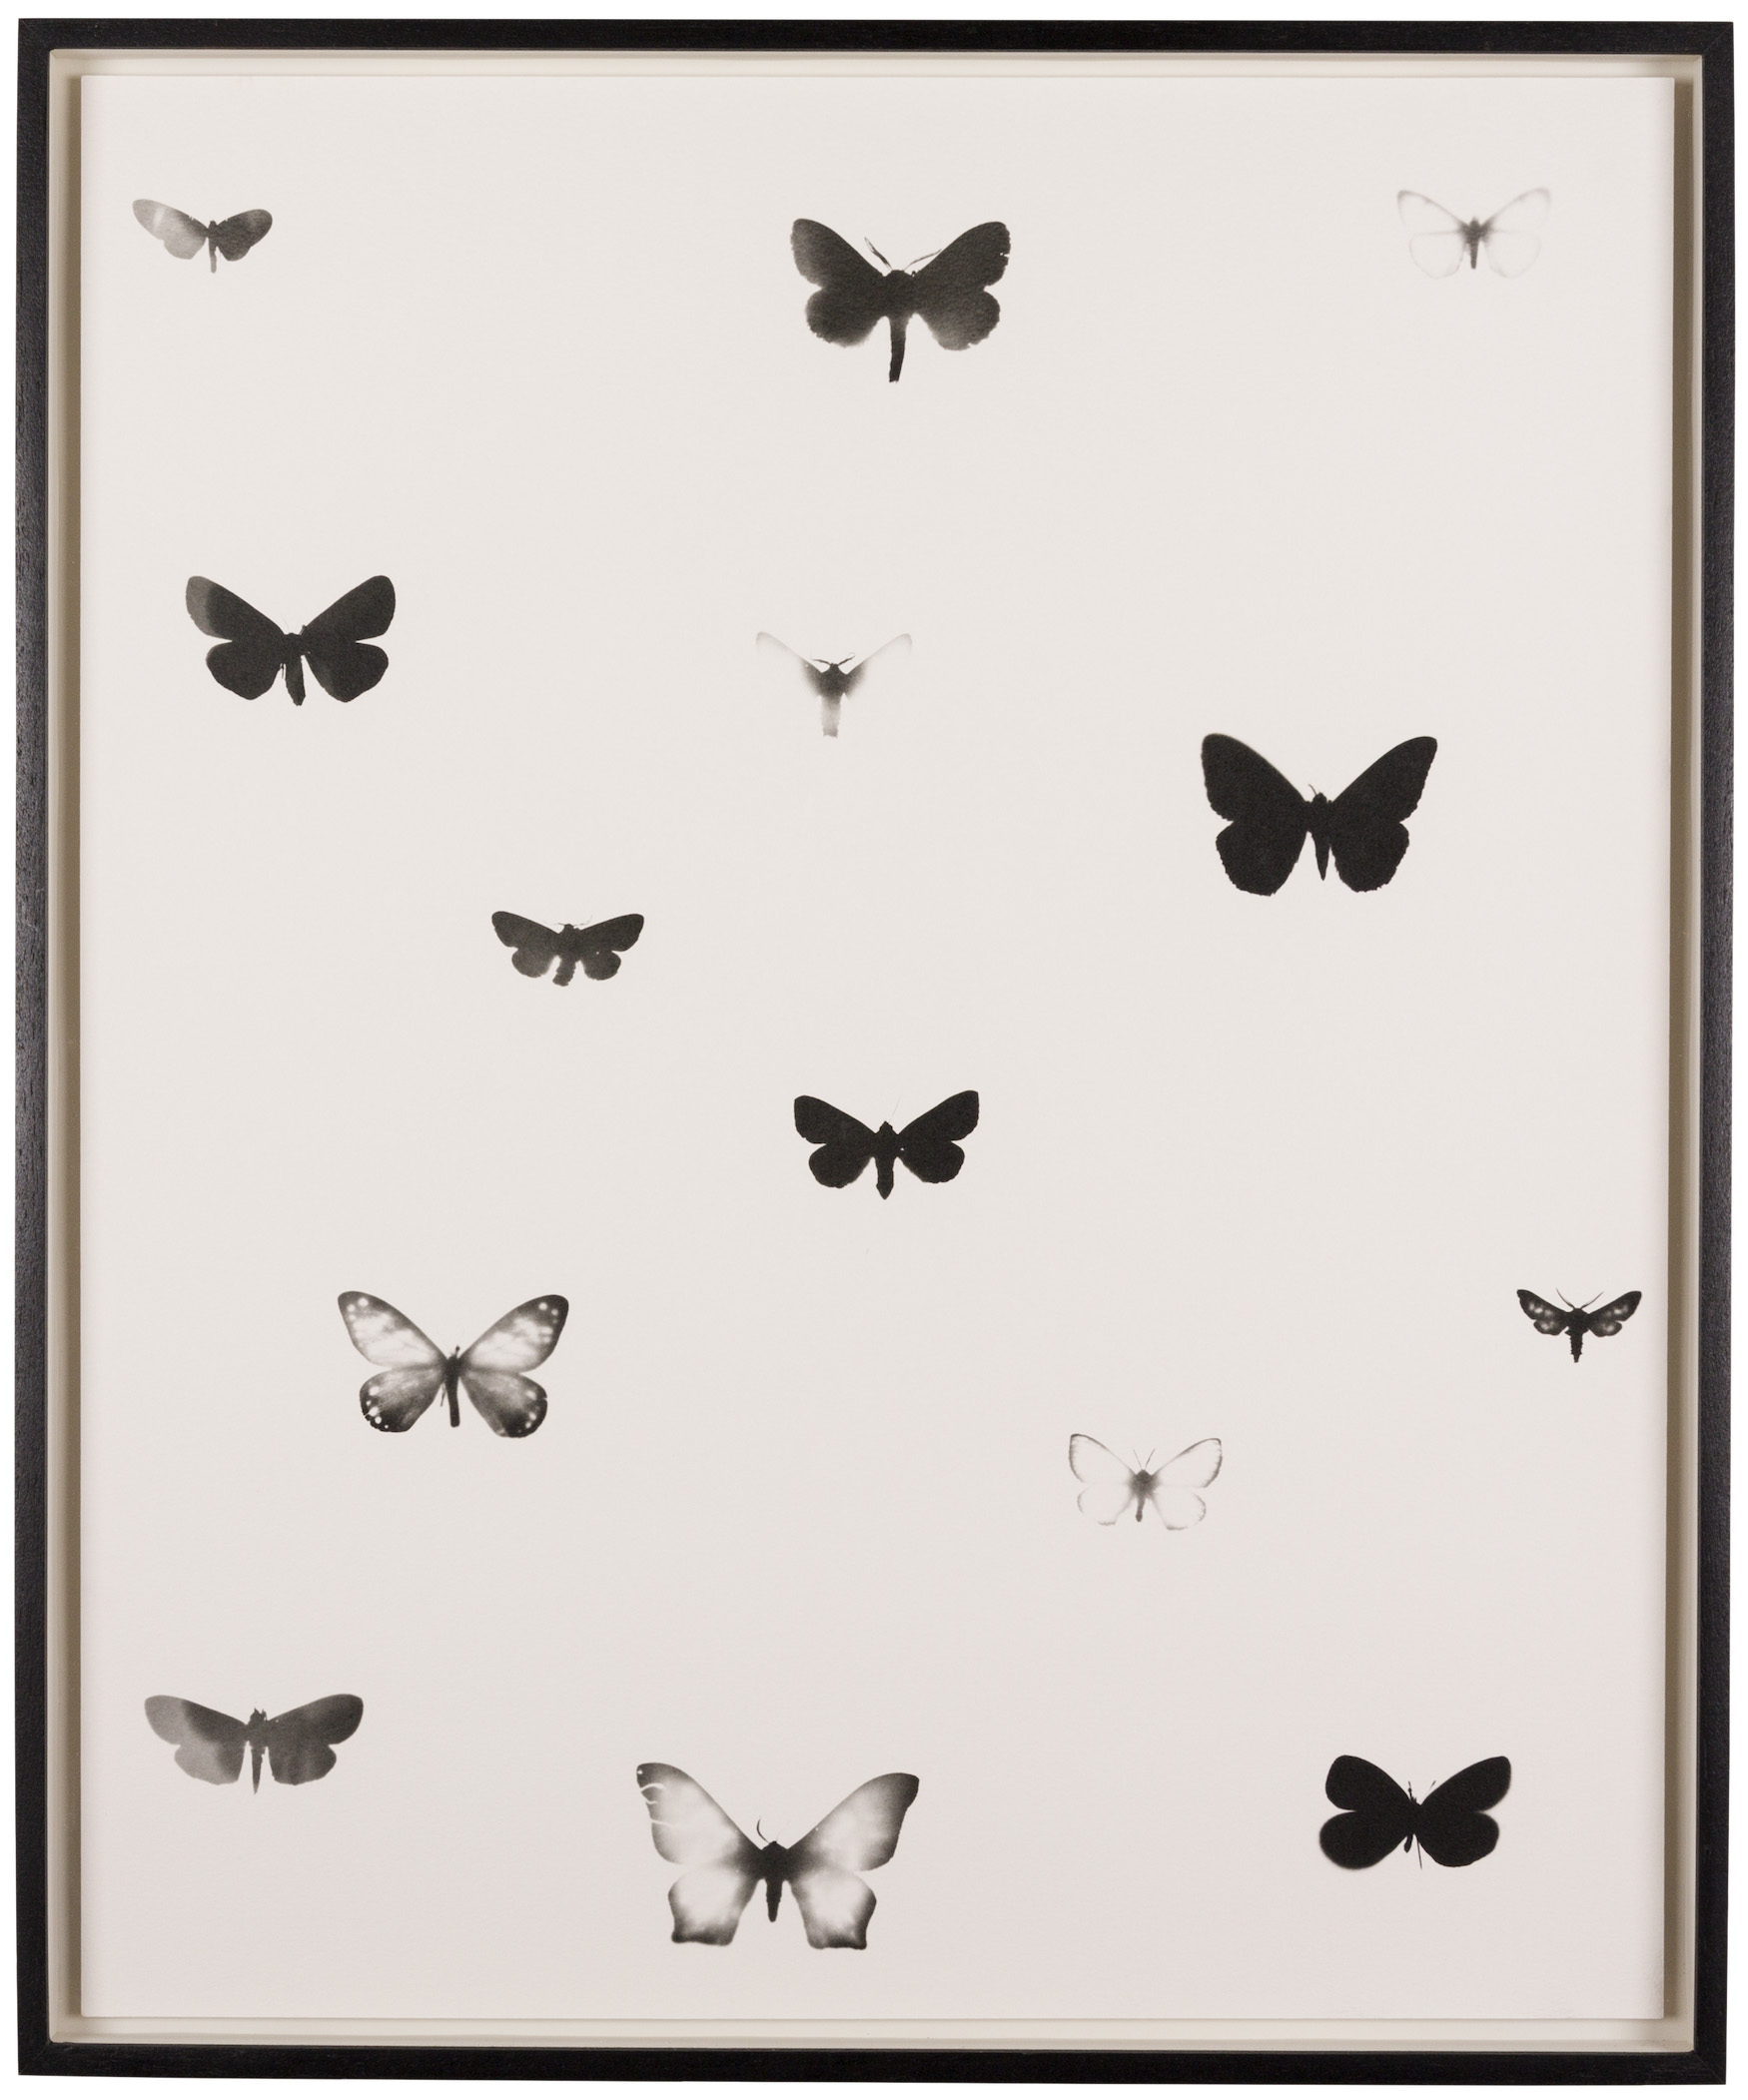 Fuga i, 2018, Handprint on cotton rag, 60,96cm x 50,8cm